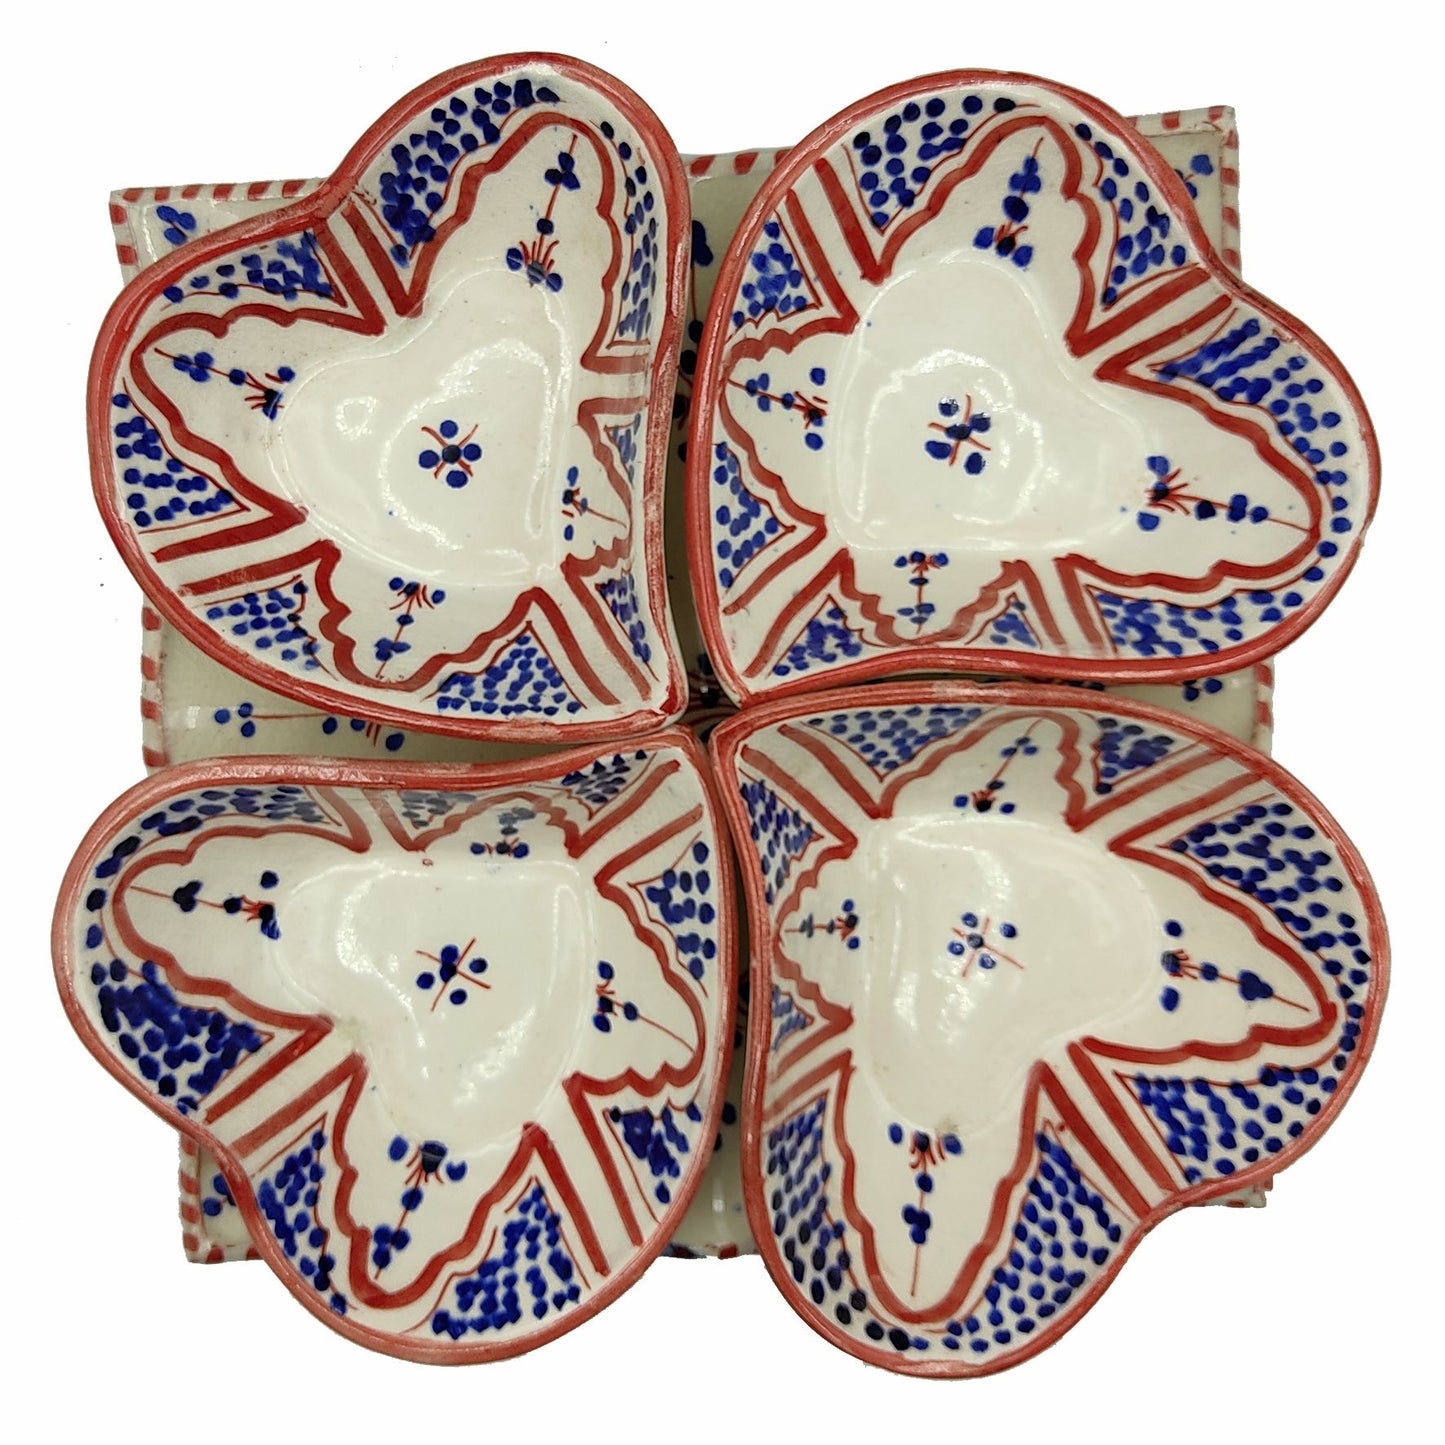 Etnisch Meubilair Voorgerecht Bord Keramiek Terracotta Marokkaans 1705211006